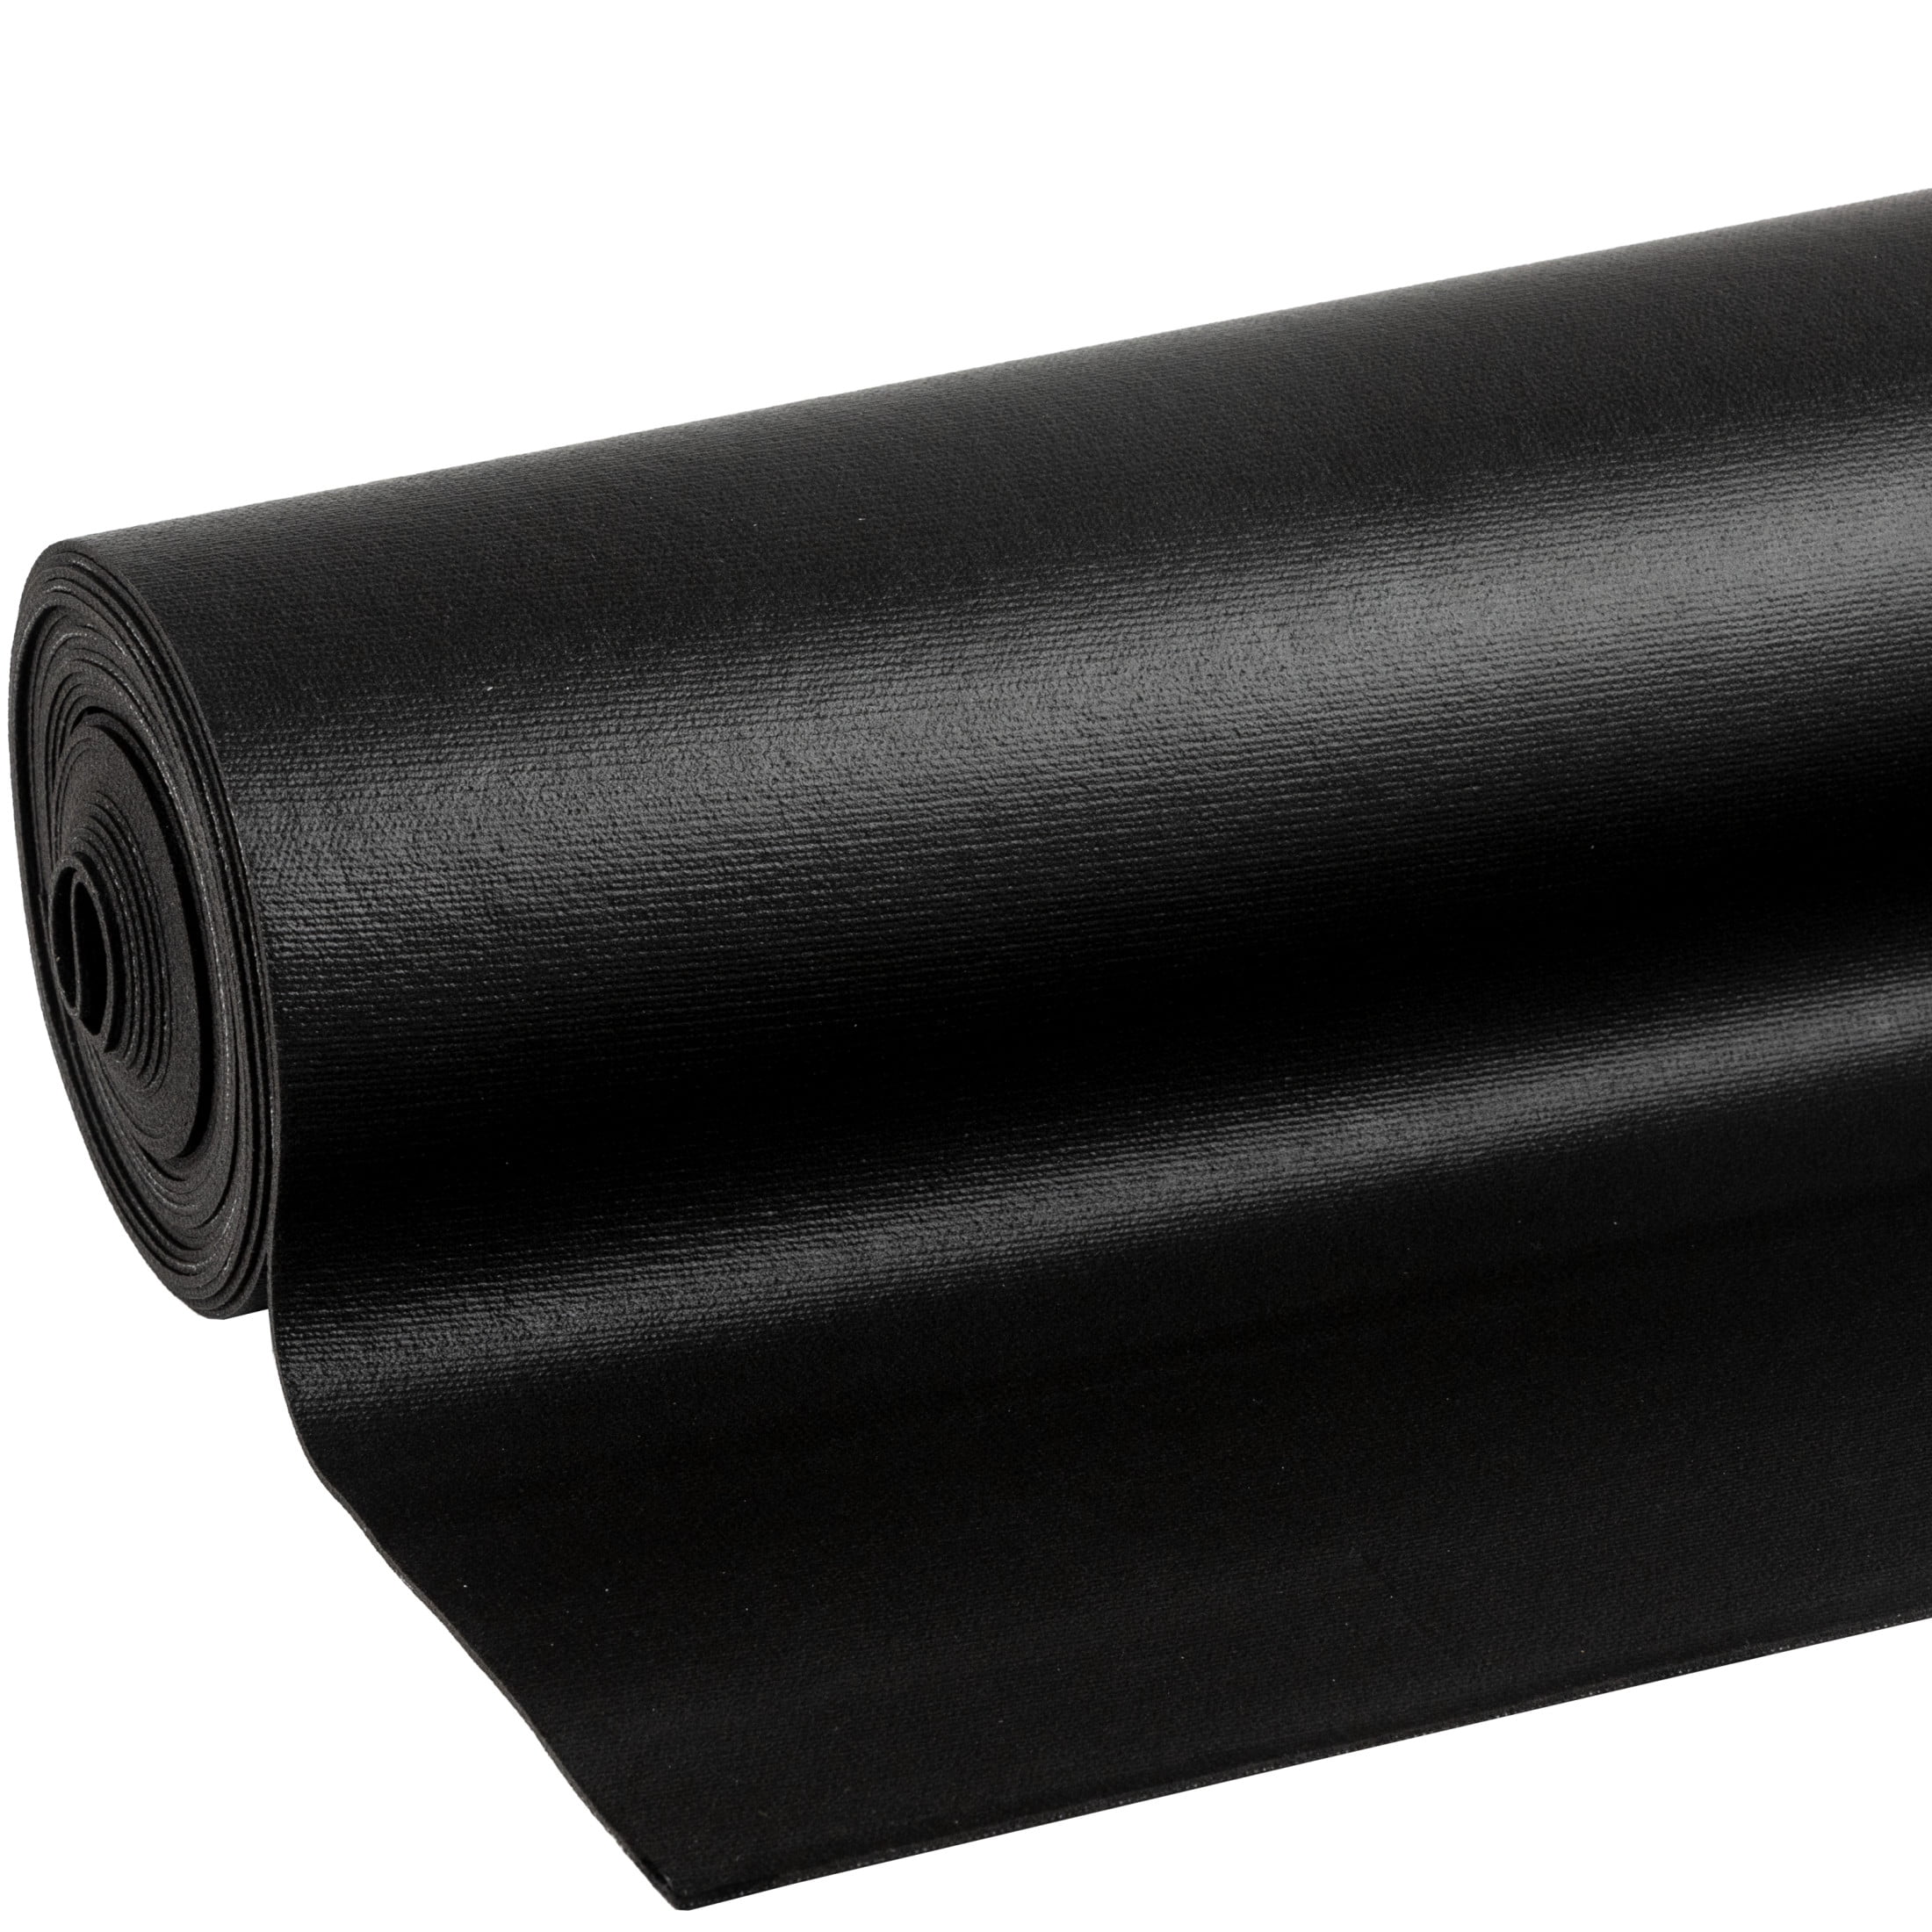 Con-Tact Premium Grip 18 in. x 4 ft. Solid Black Non-Adhesive